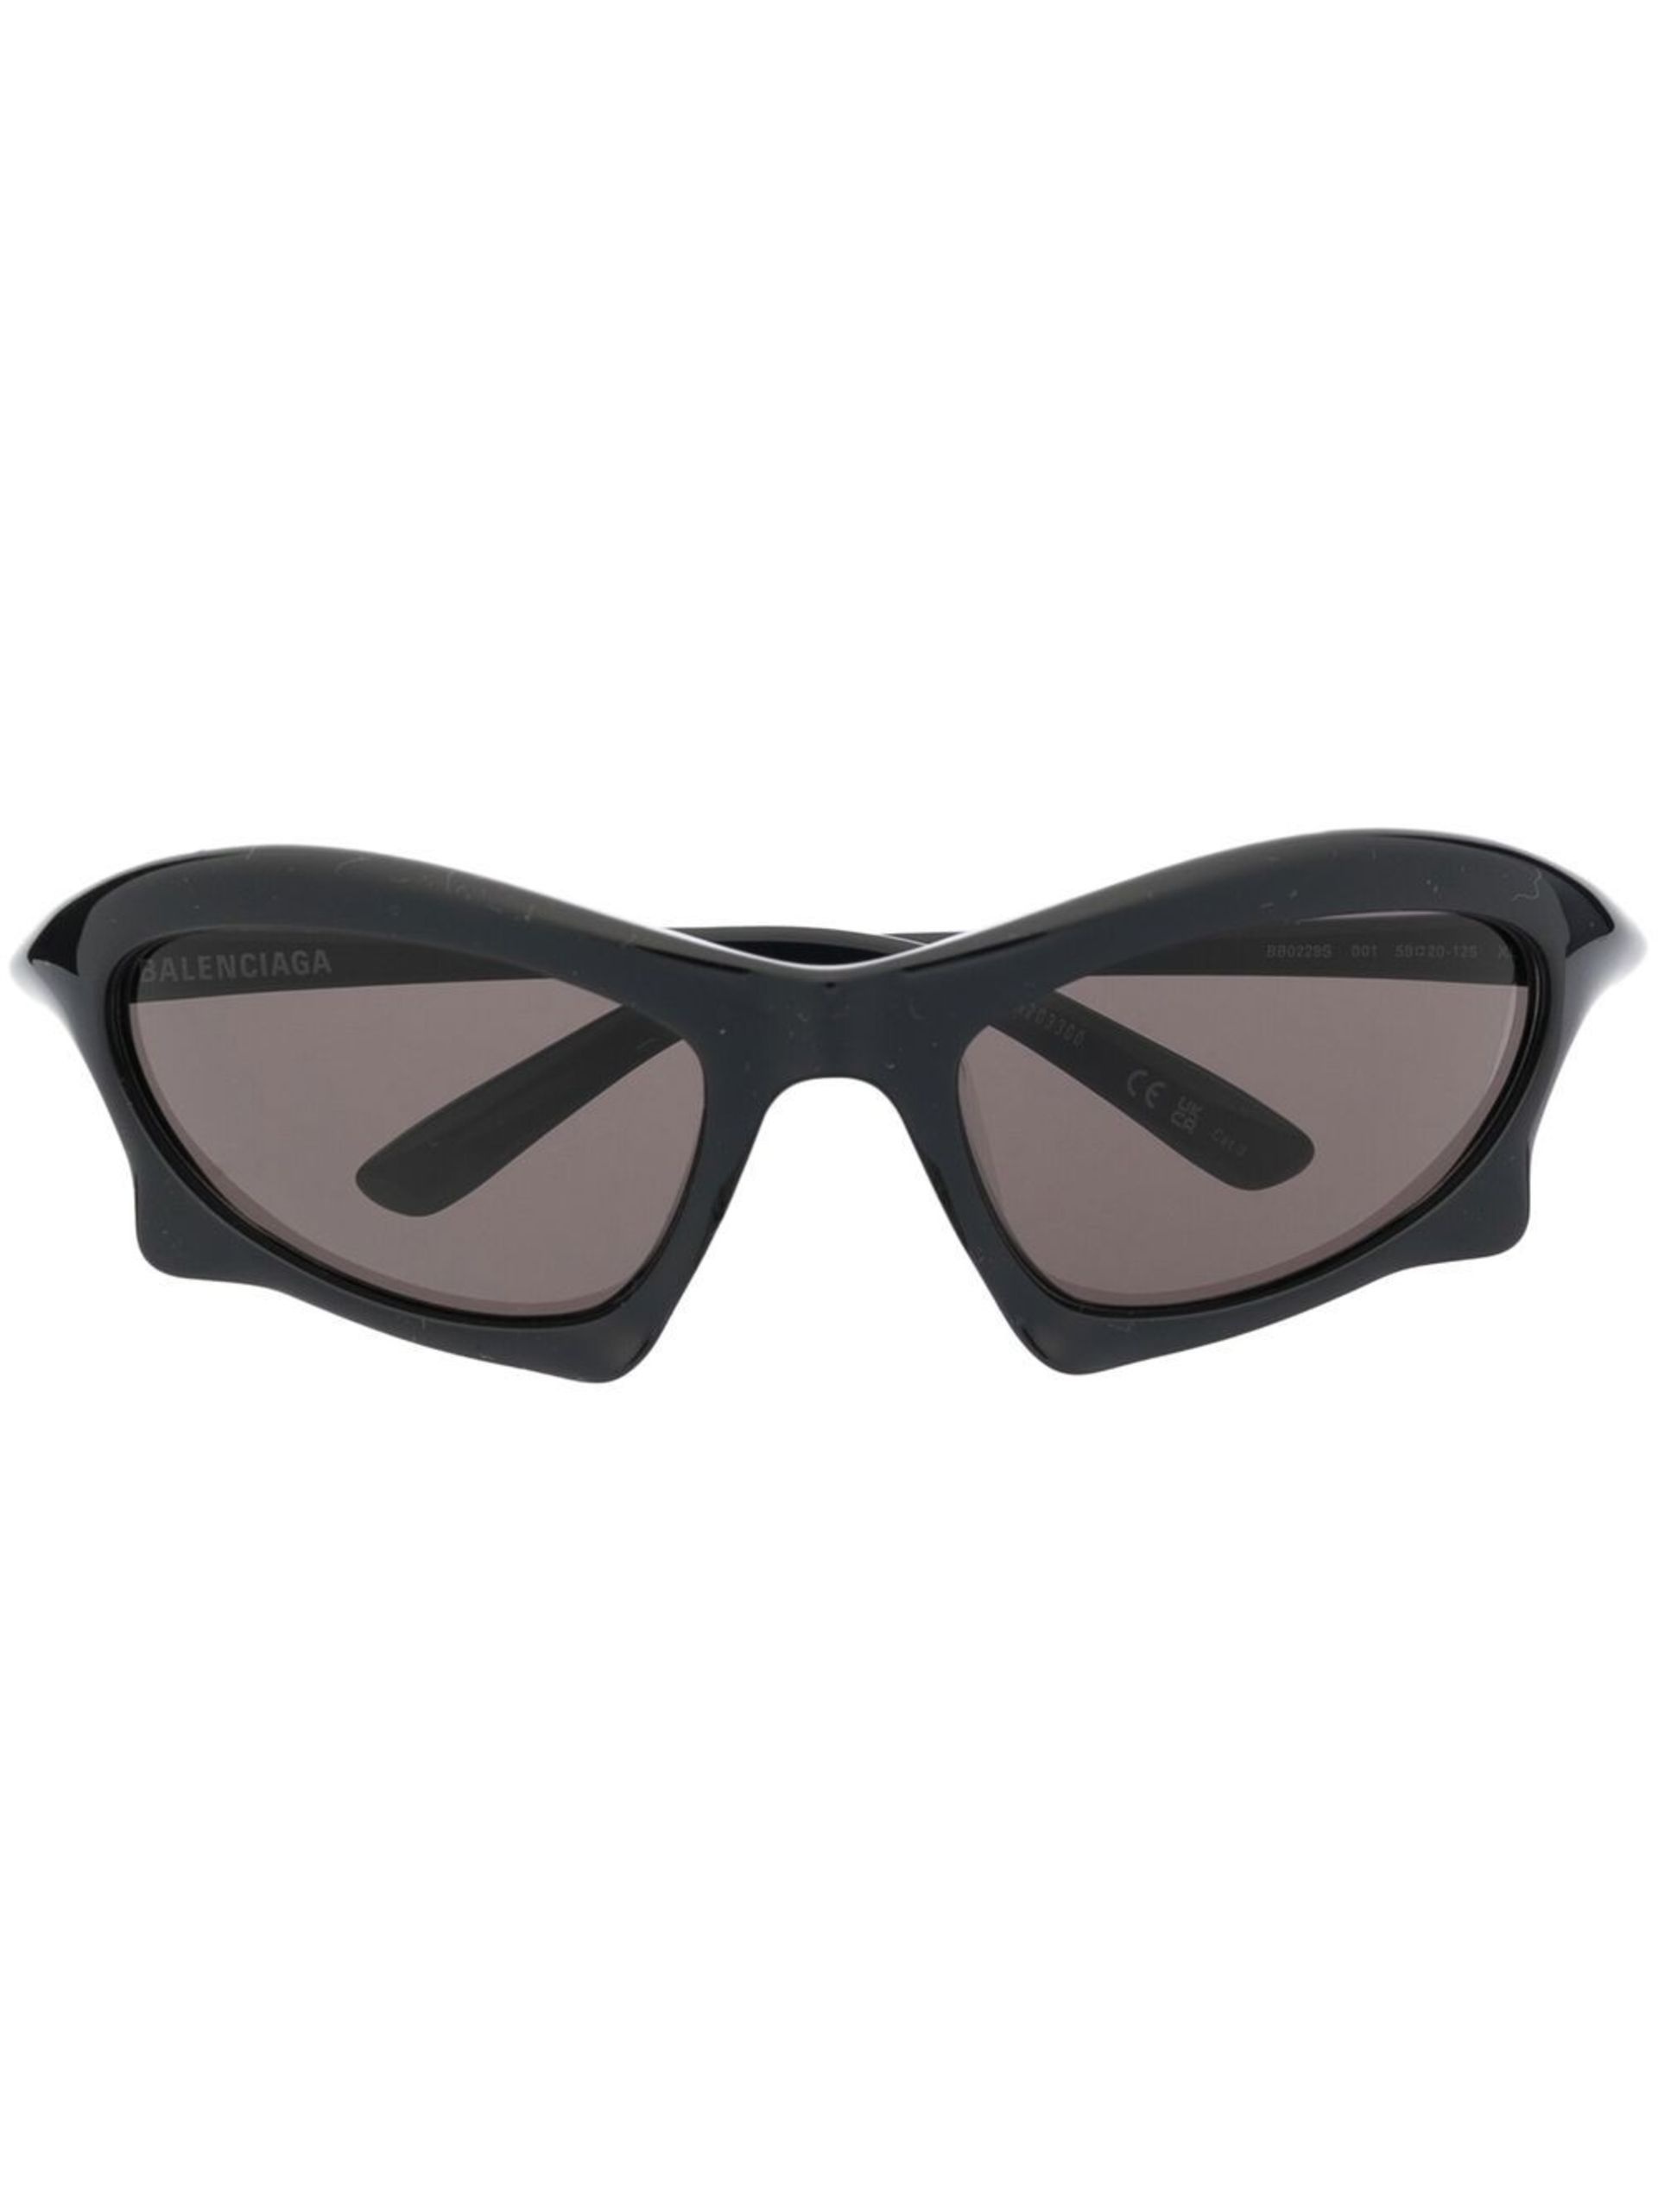 black Bat rectangle sunglasses - 1